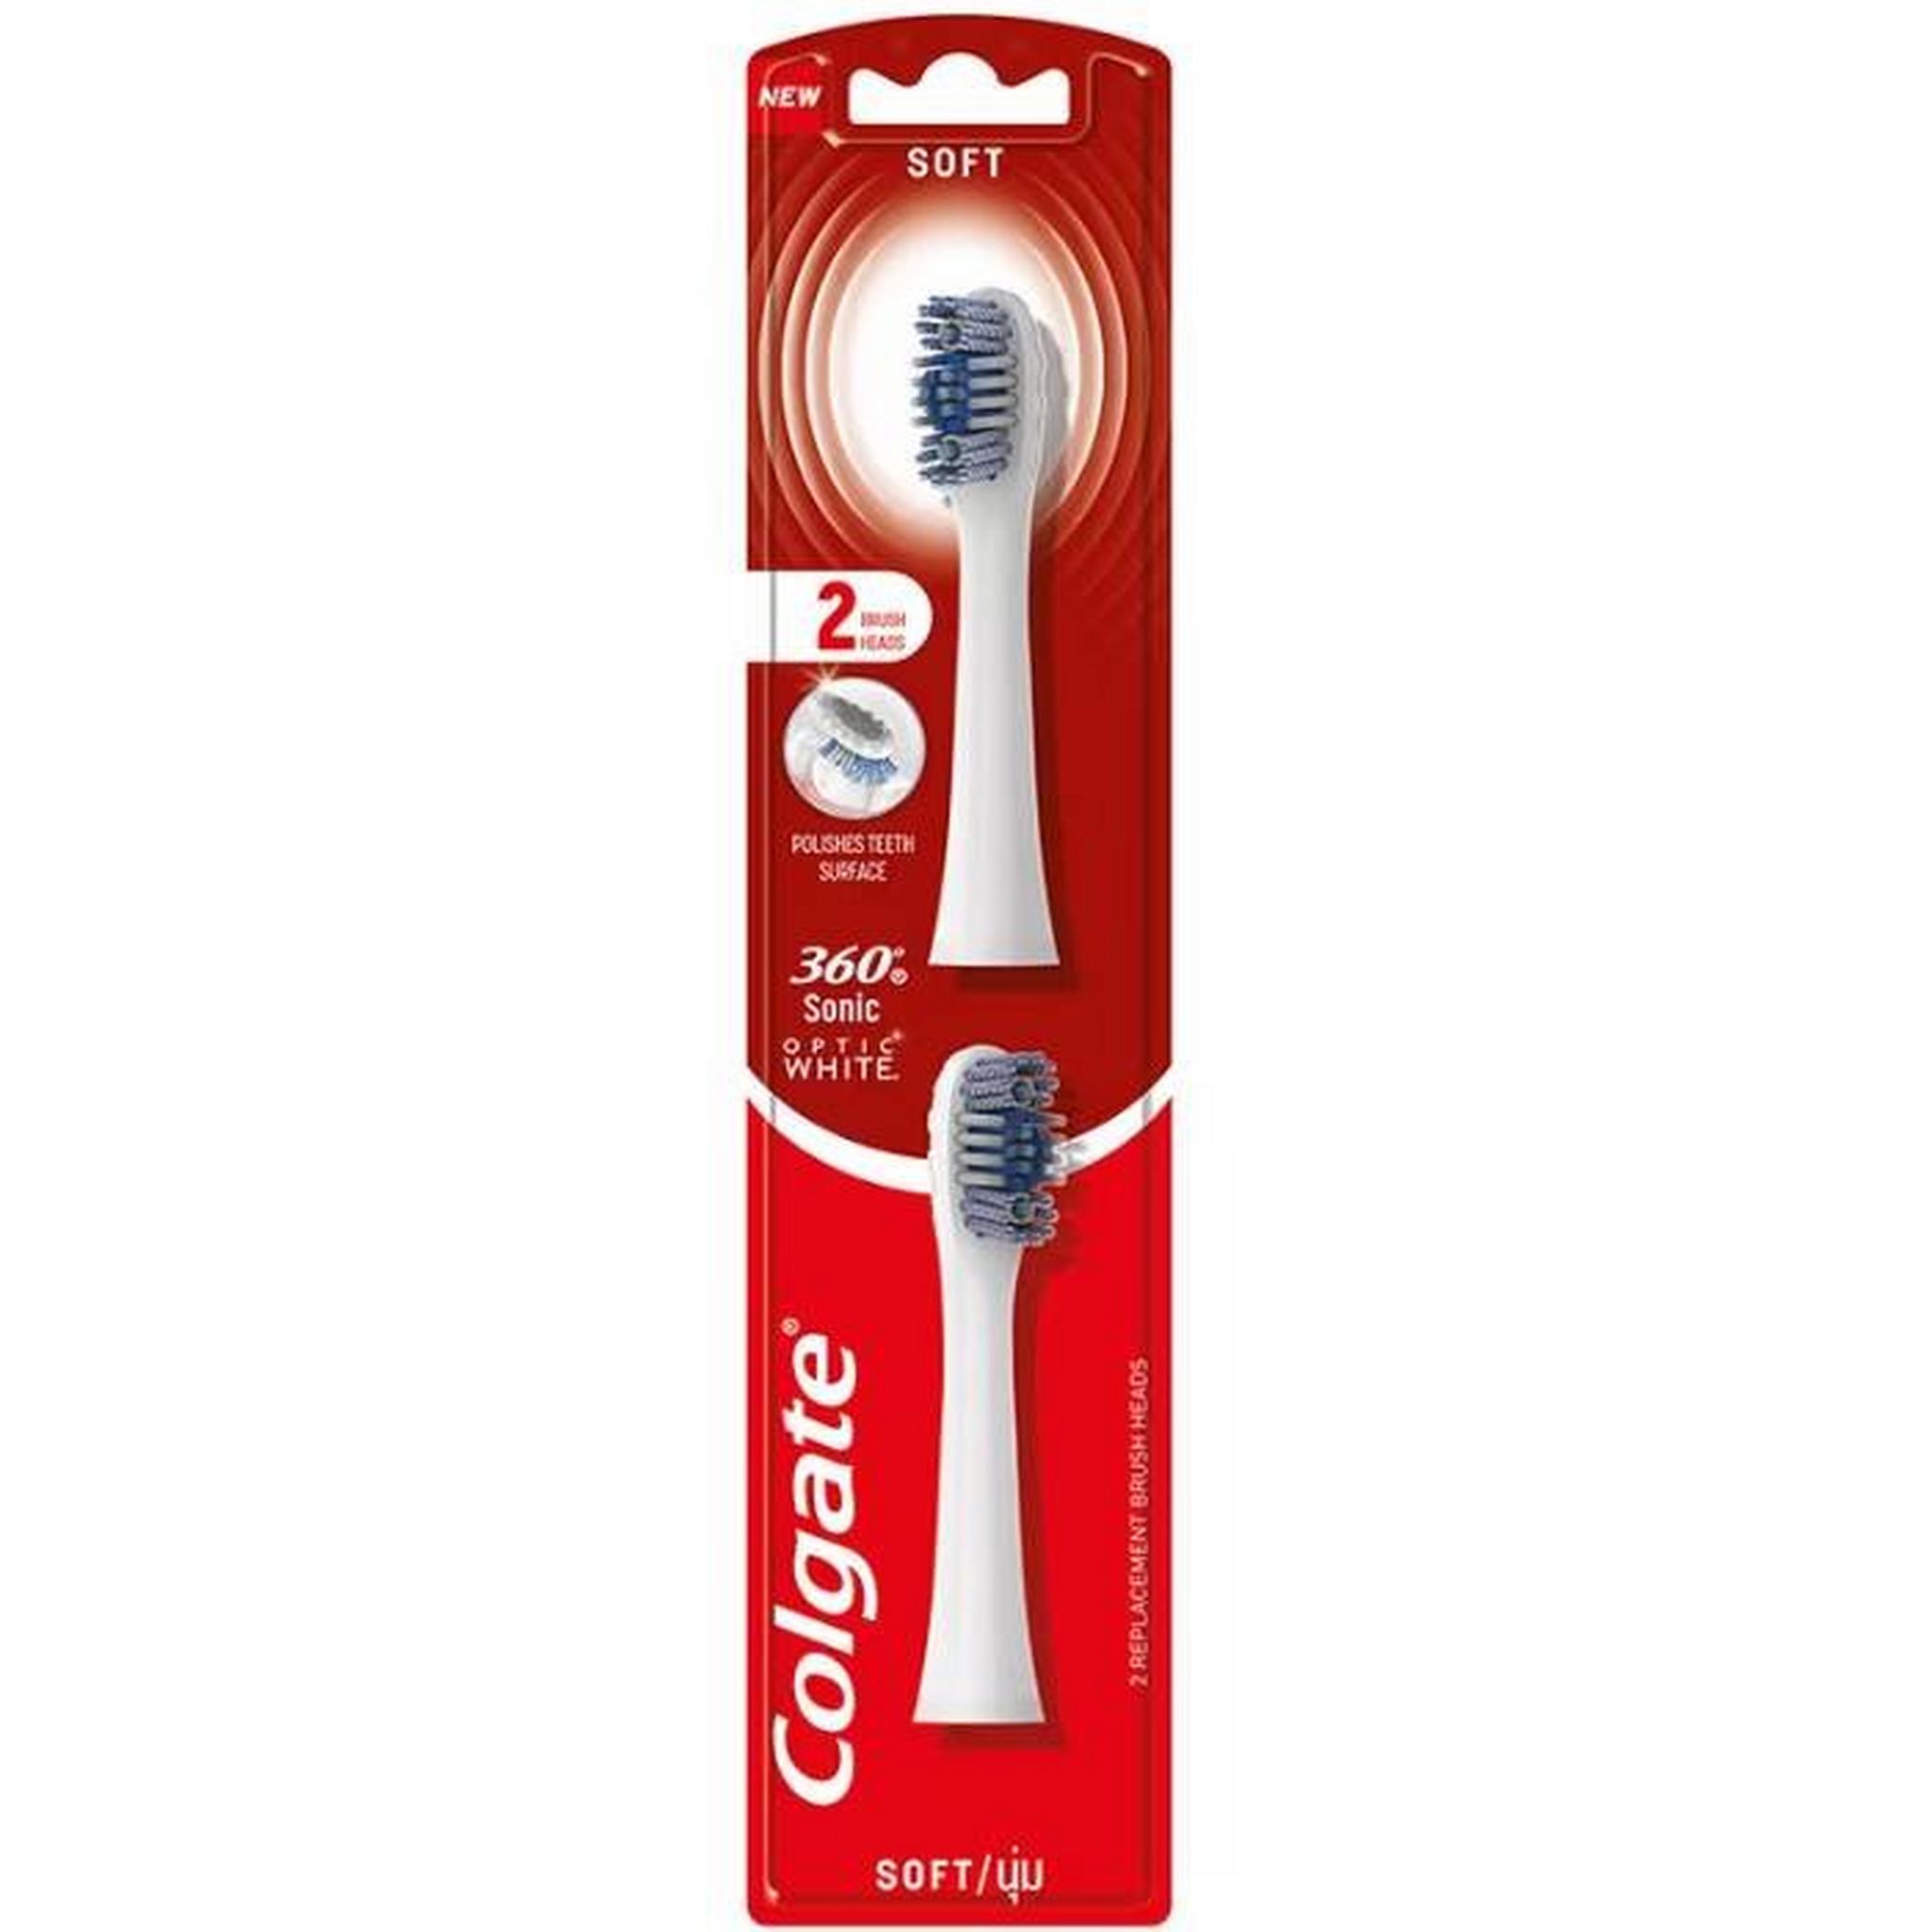 Colgate 360 Optic White Toothbrush Heads – White